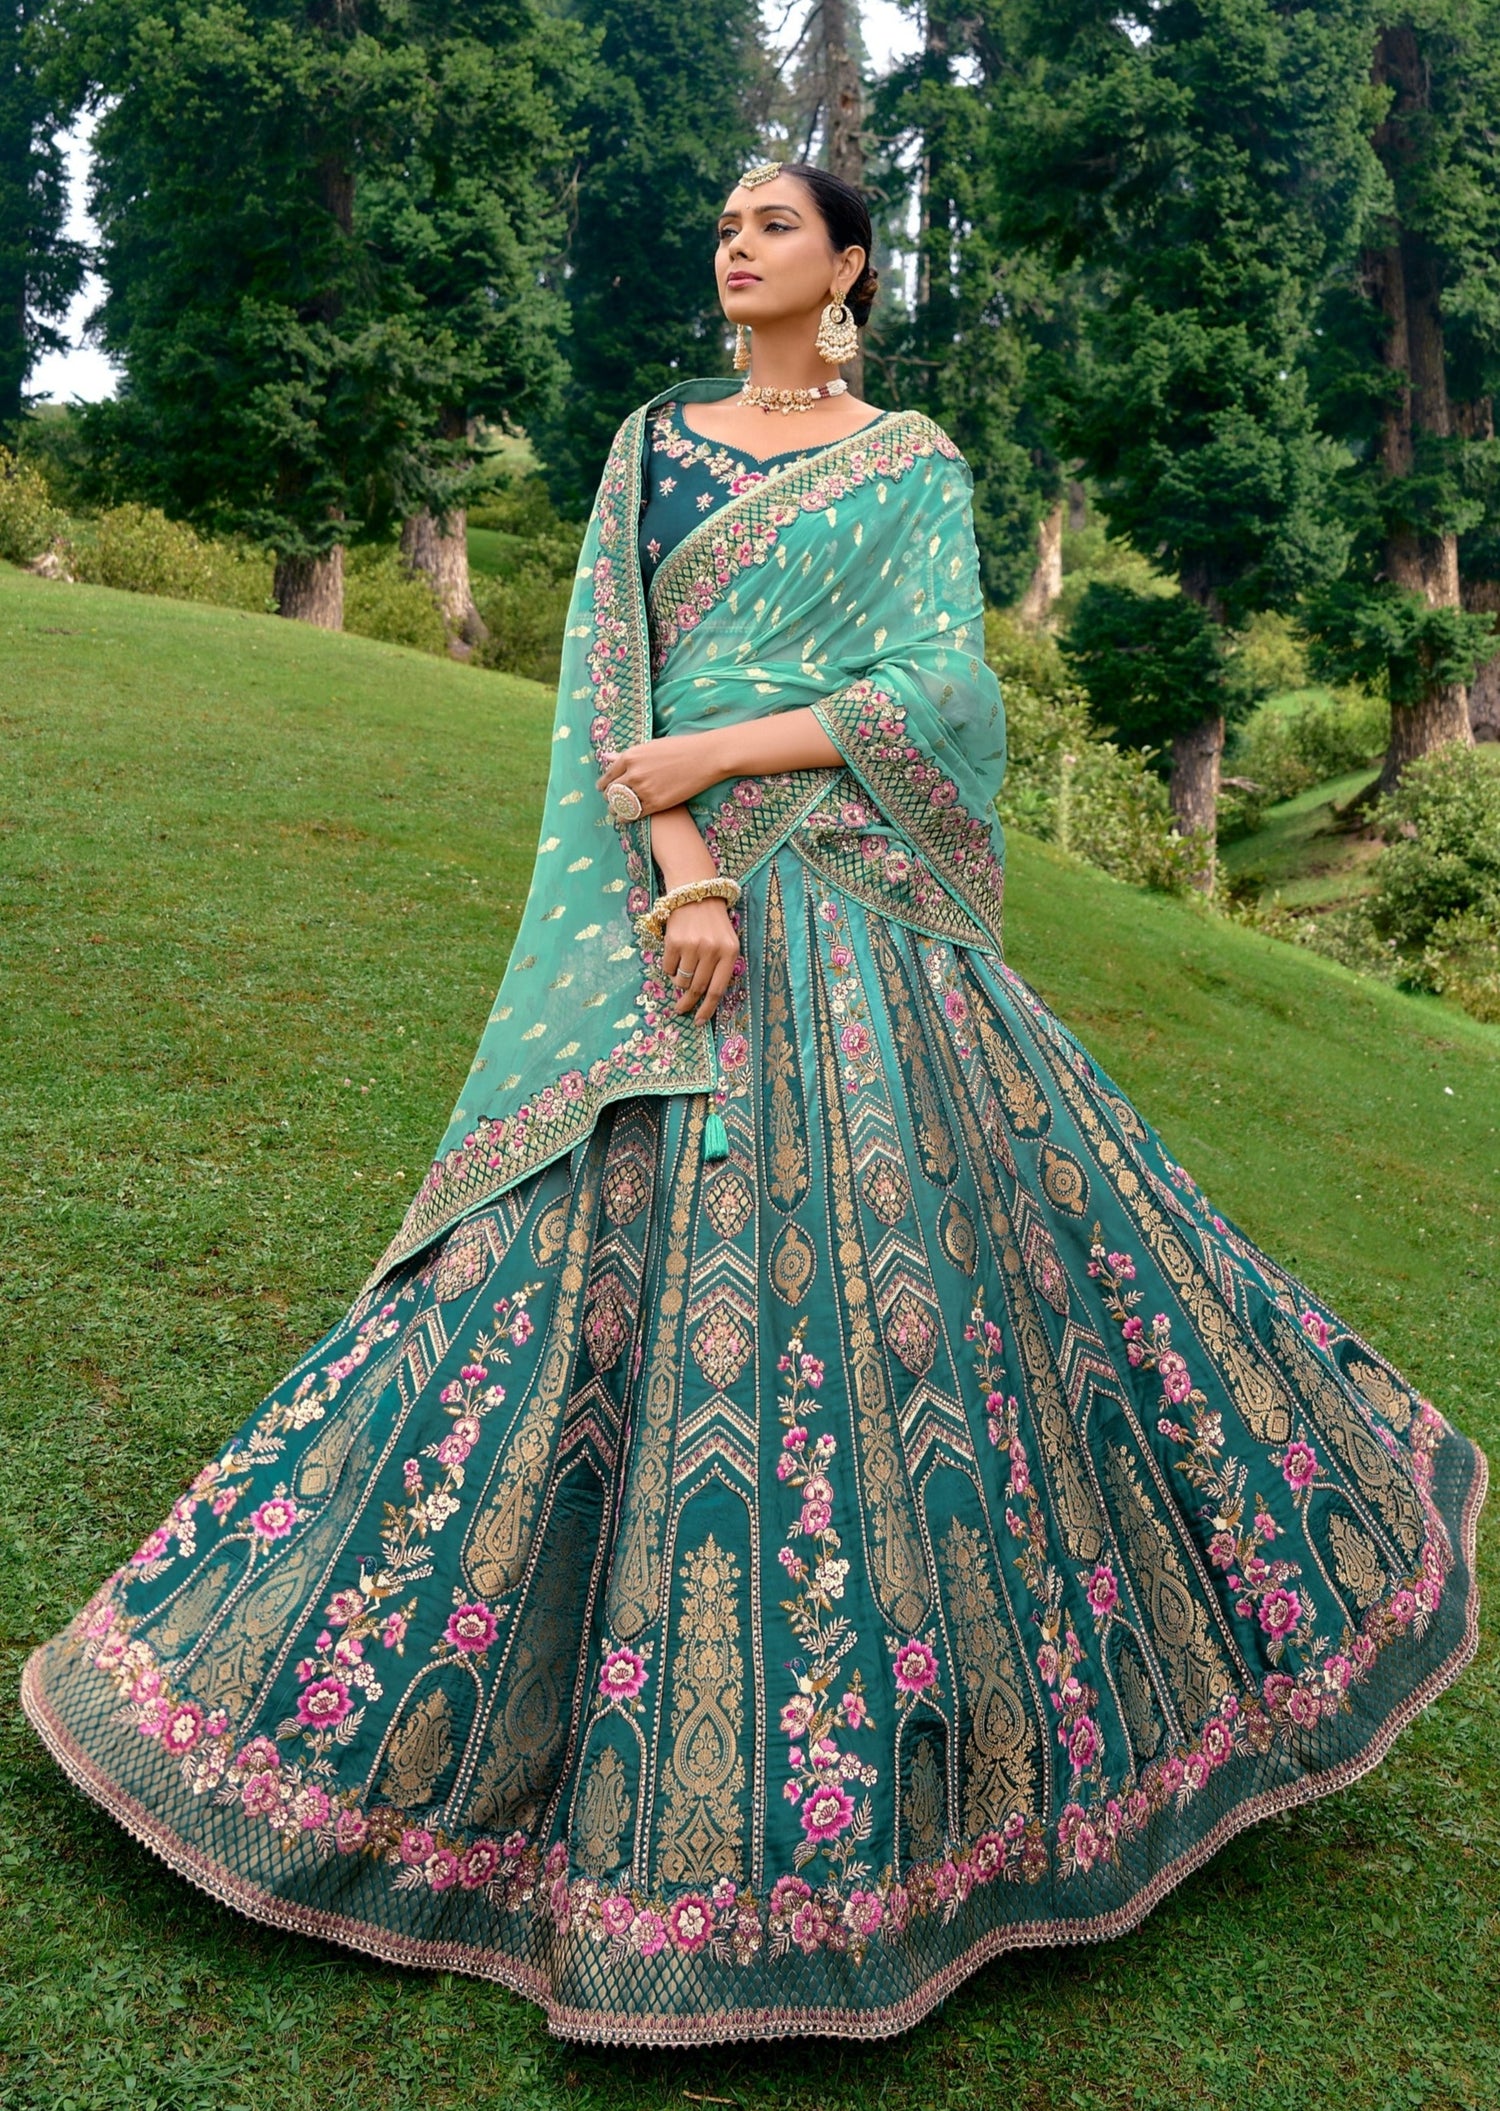 PARTYWEAR BRIDAL LEHENGA CHOLI DESIGNER TAFETASILK LEHNGA DRESS INDIAN  BOLLYWOOD | eBay